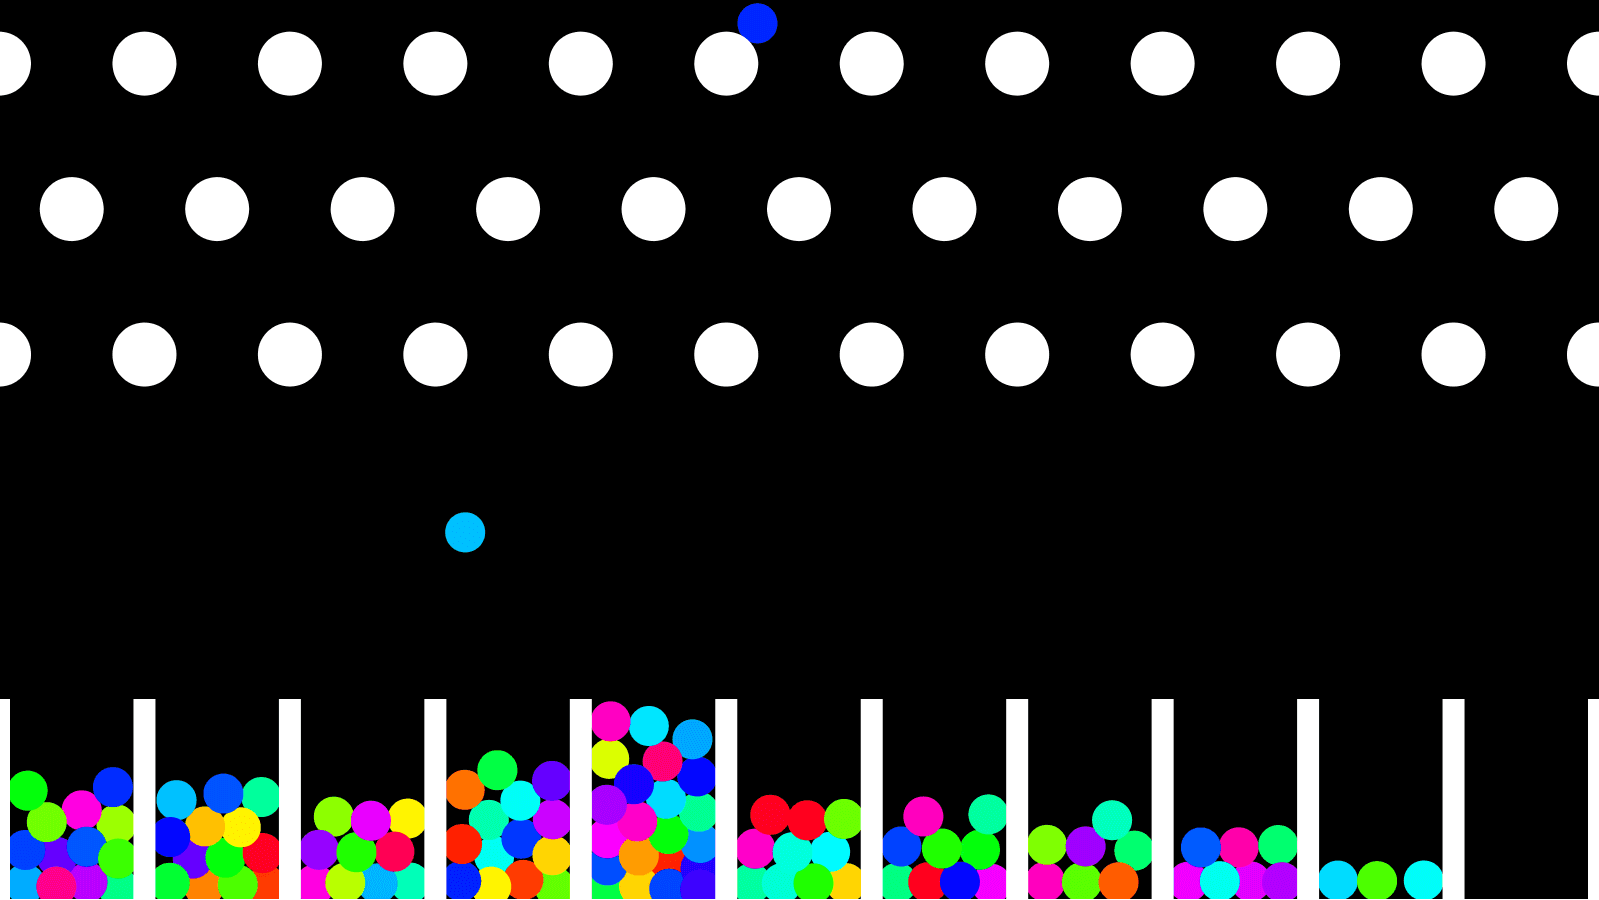 "Plinko Simulation" code example